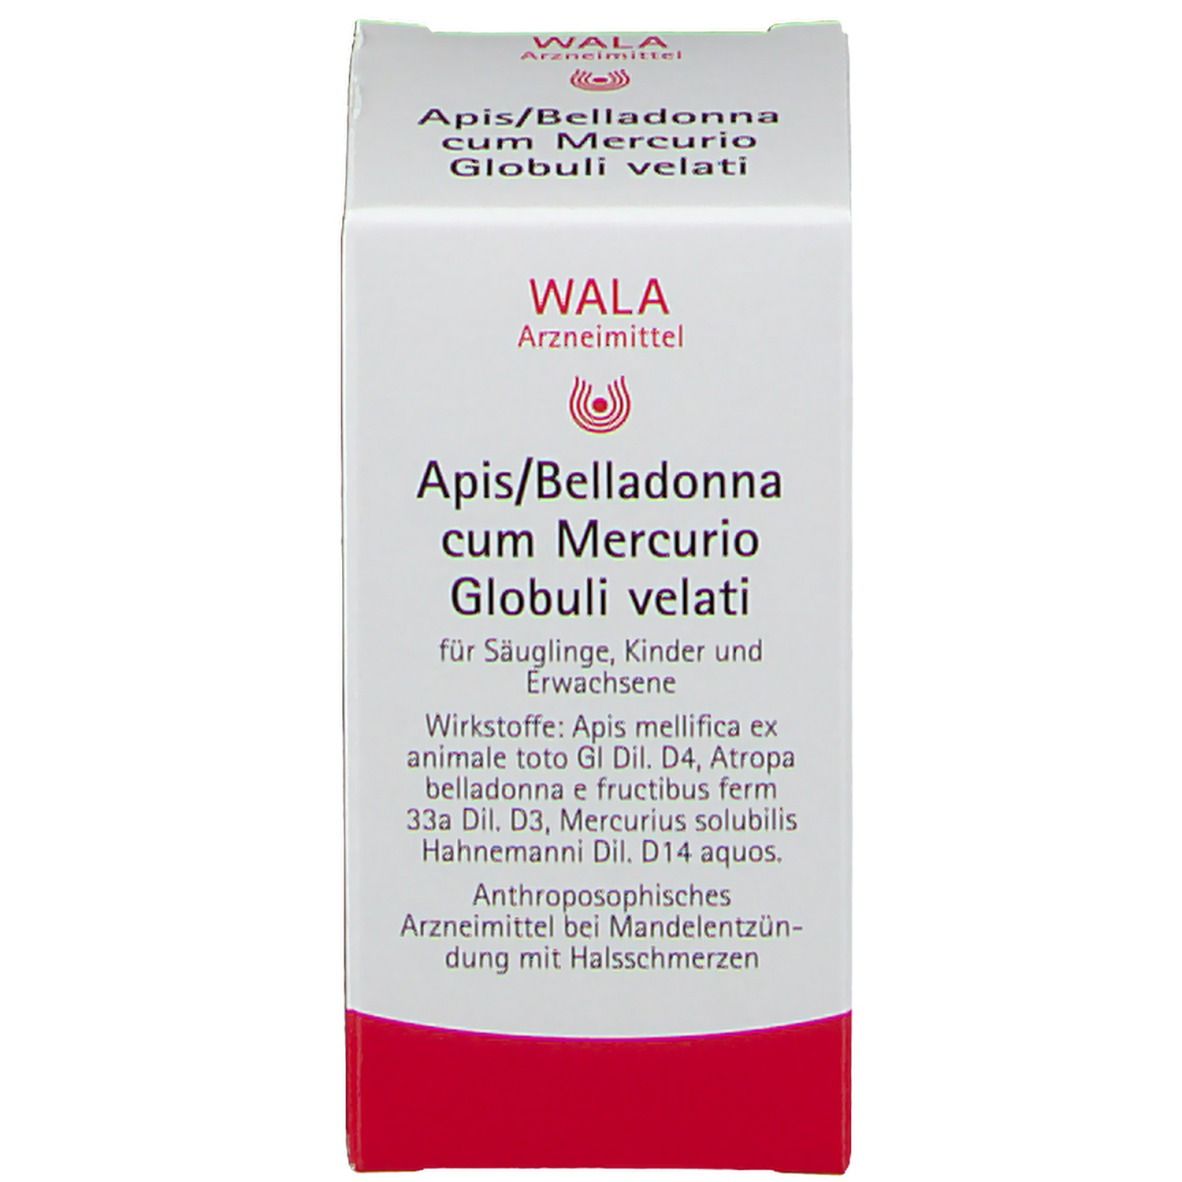 WALA® Apis Belladonna c. Mercurio Globuli